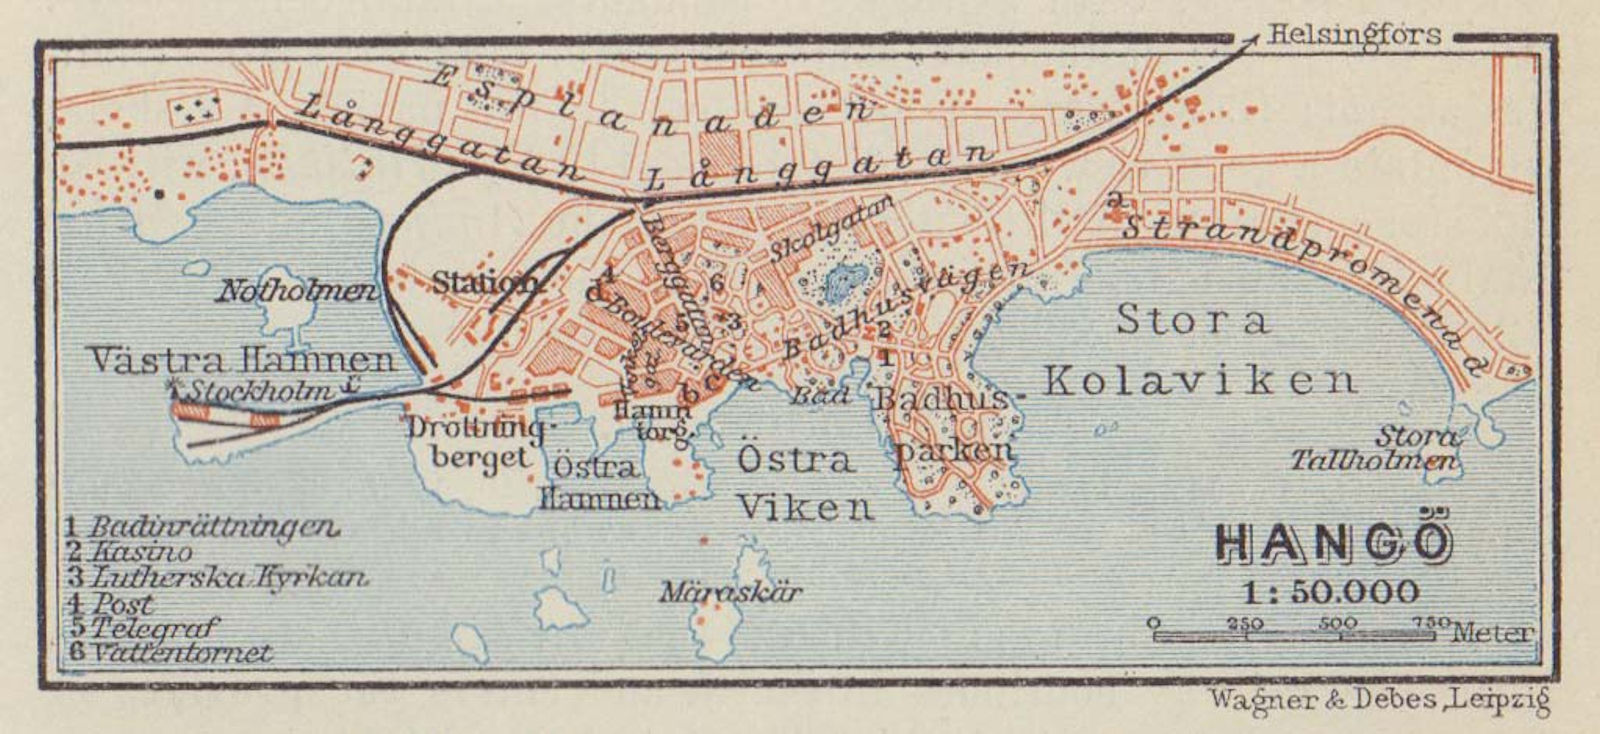 Hanko / Hango town / city plan. Finland. VERY SMALL. BAEDEKER 1914 old map